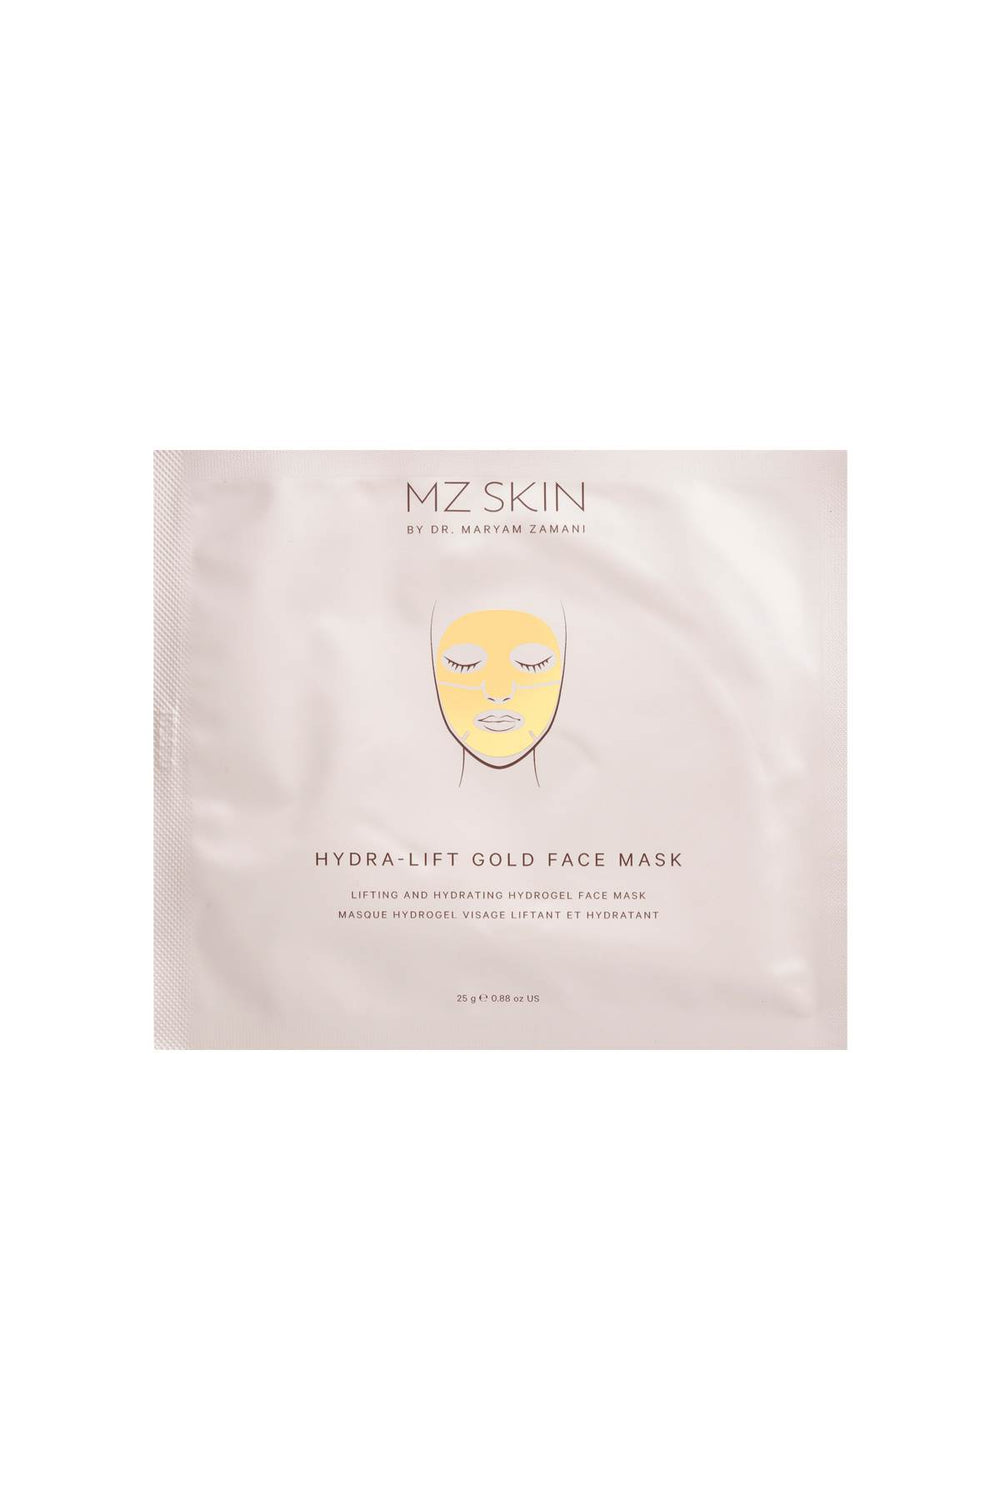 Mz skin hydra-lift gold face mask-1